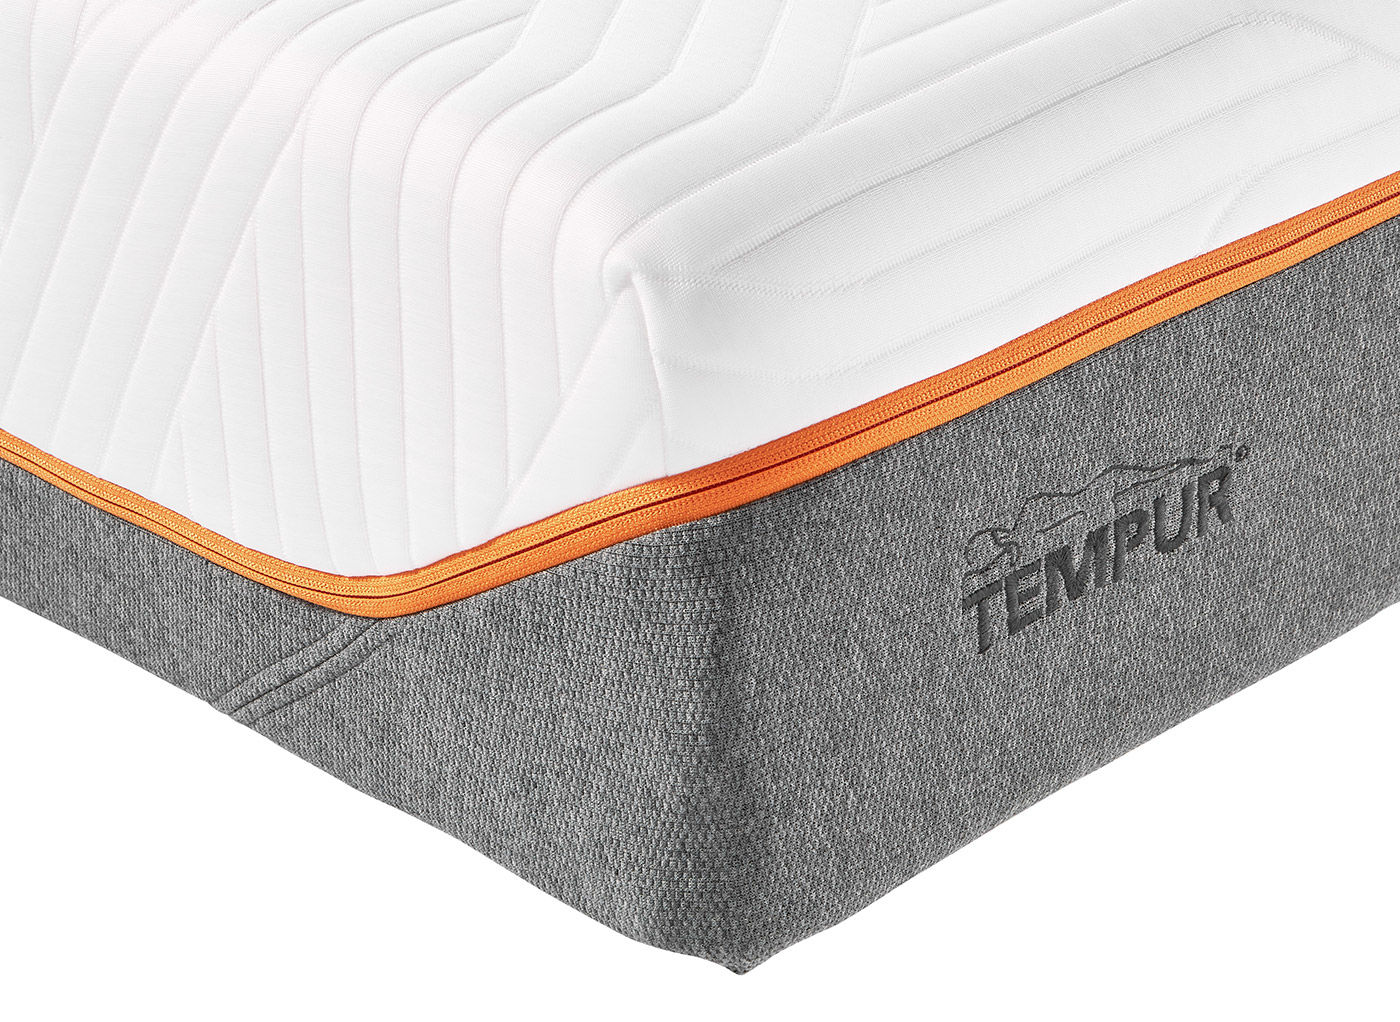 tempur contour elite mattress king